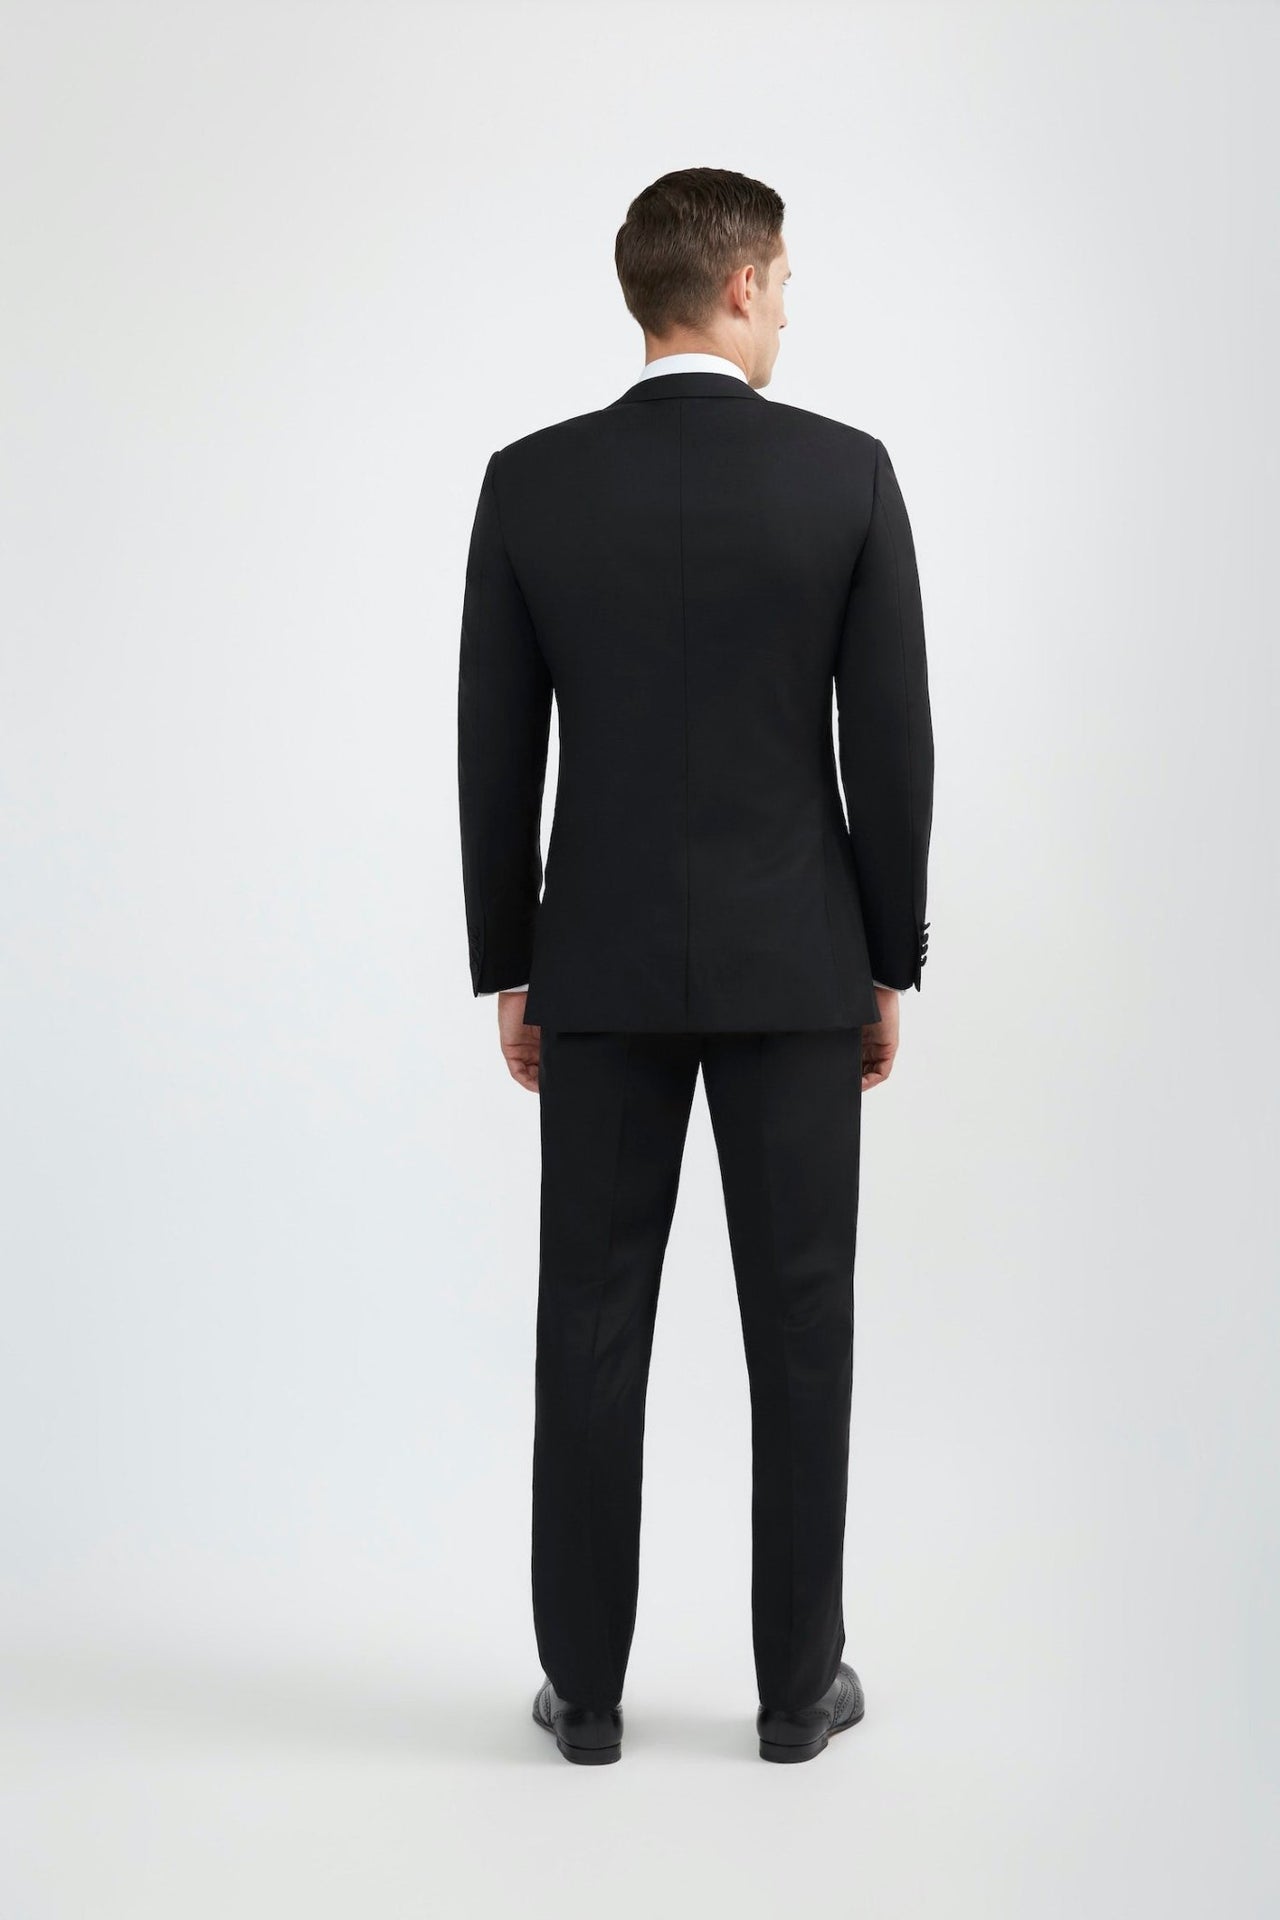 Luxurious 100% Super Fine Italian Wool Black Suit - Tomasso Black